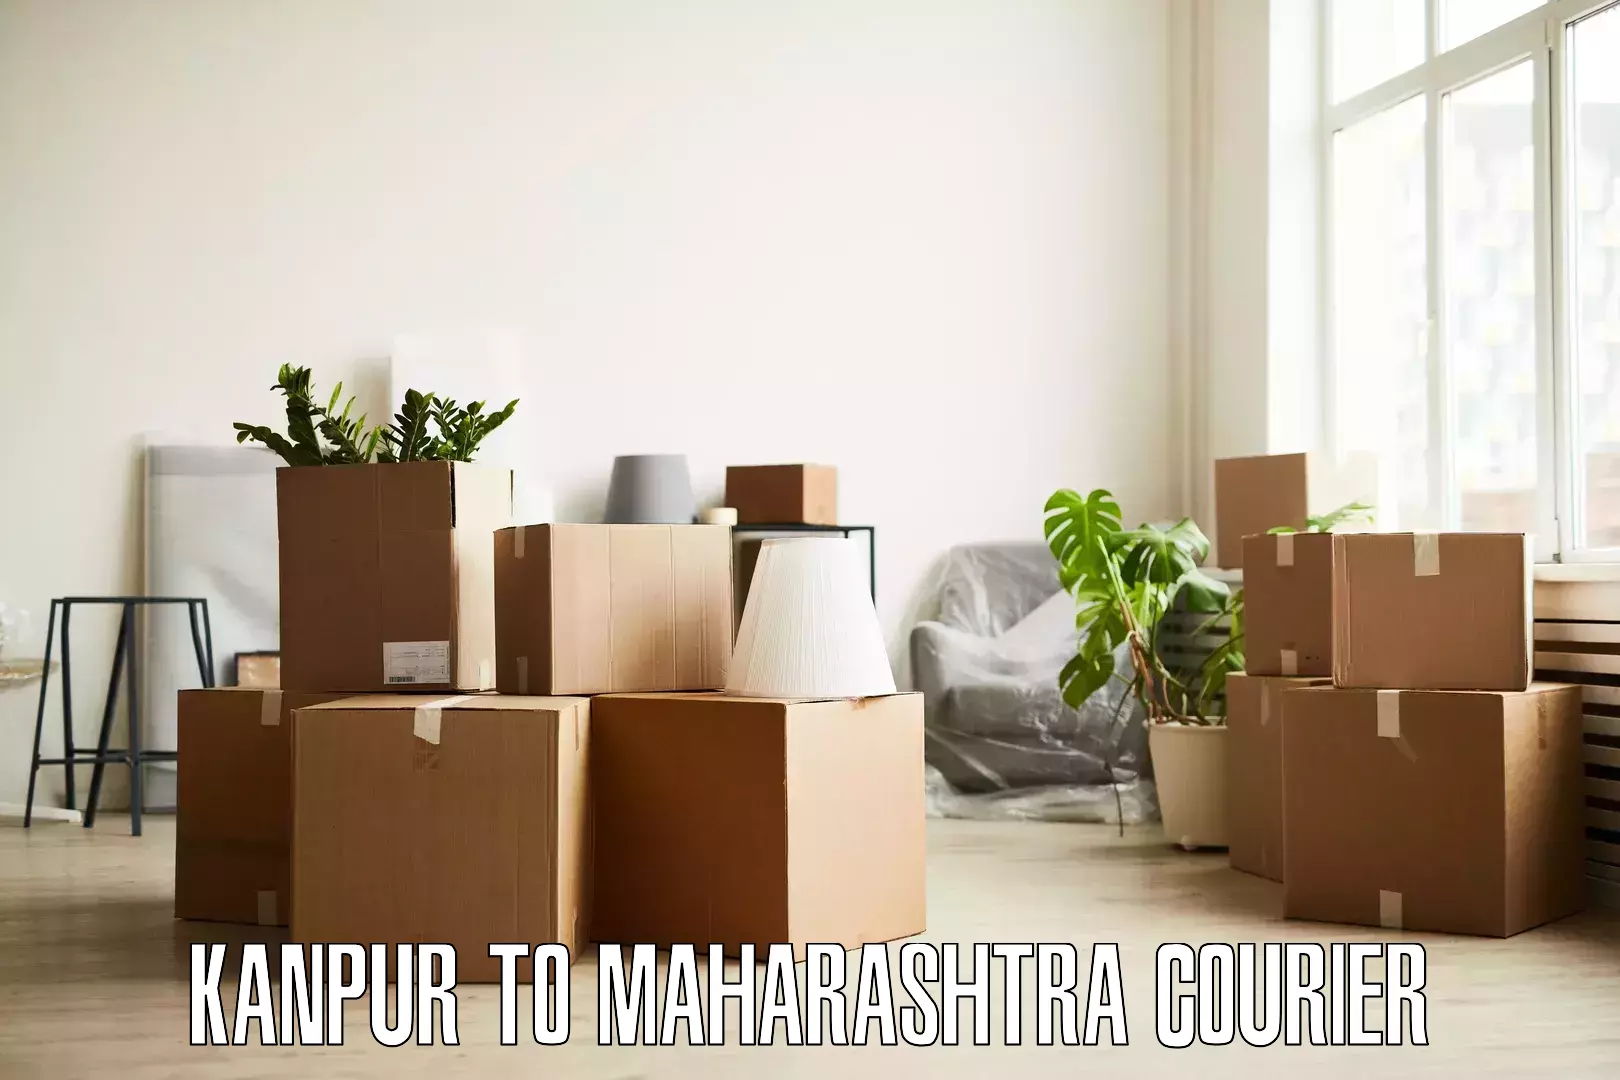 Professional moving company Kanpur to Vita